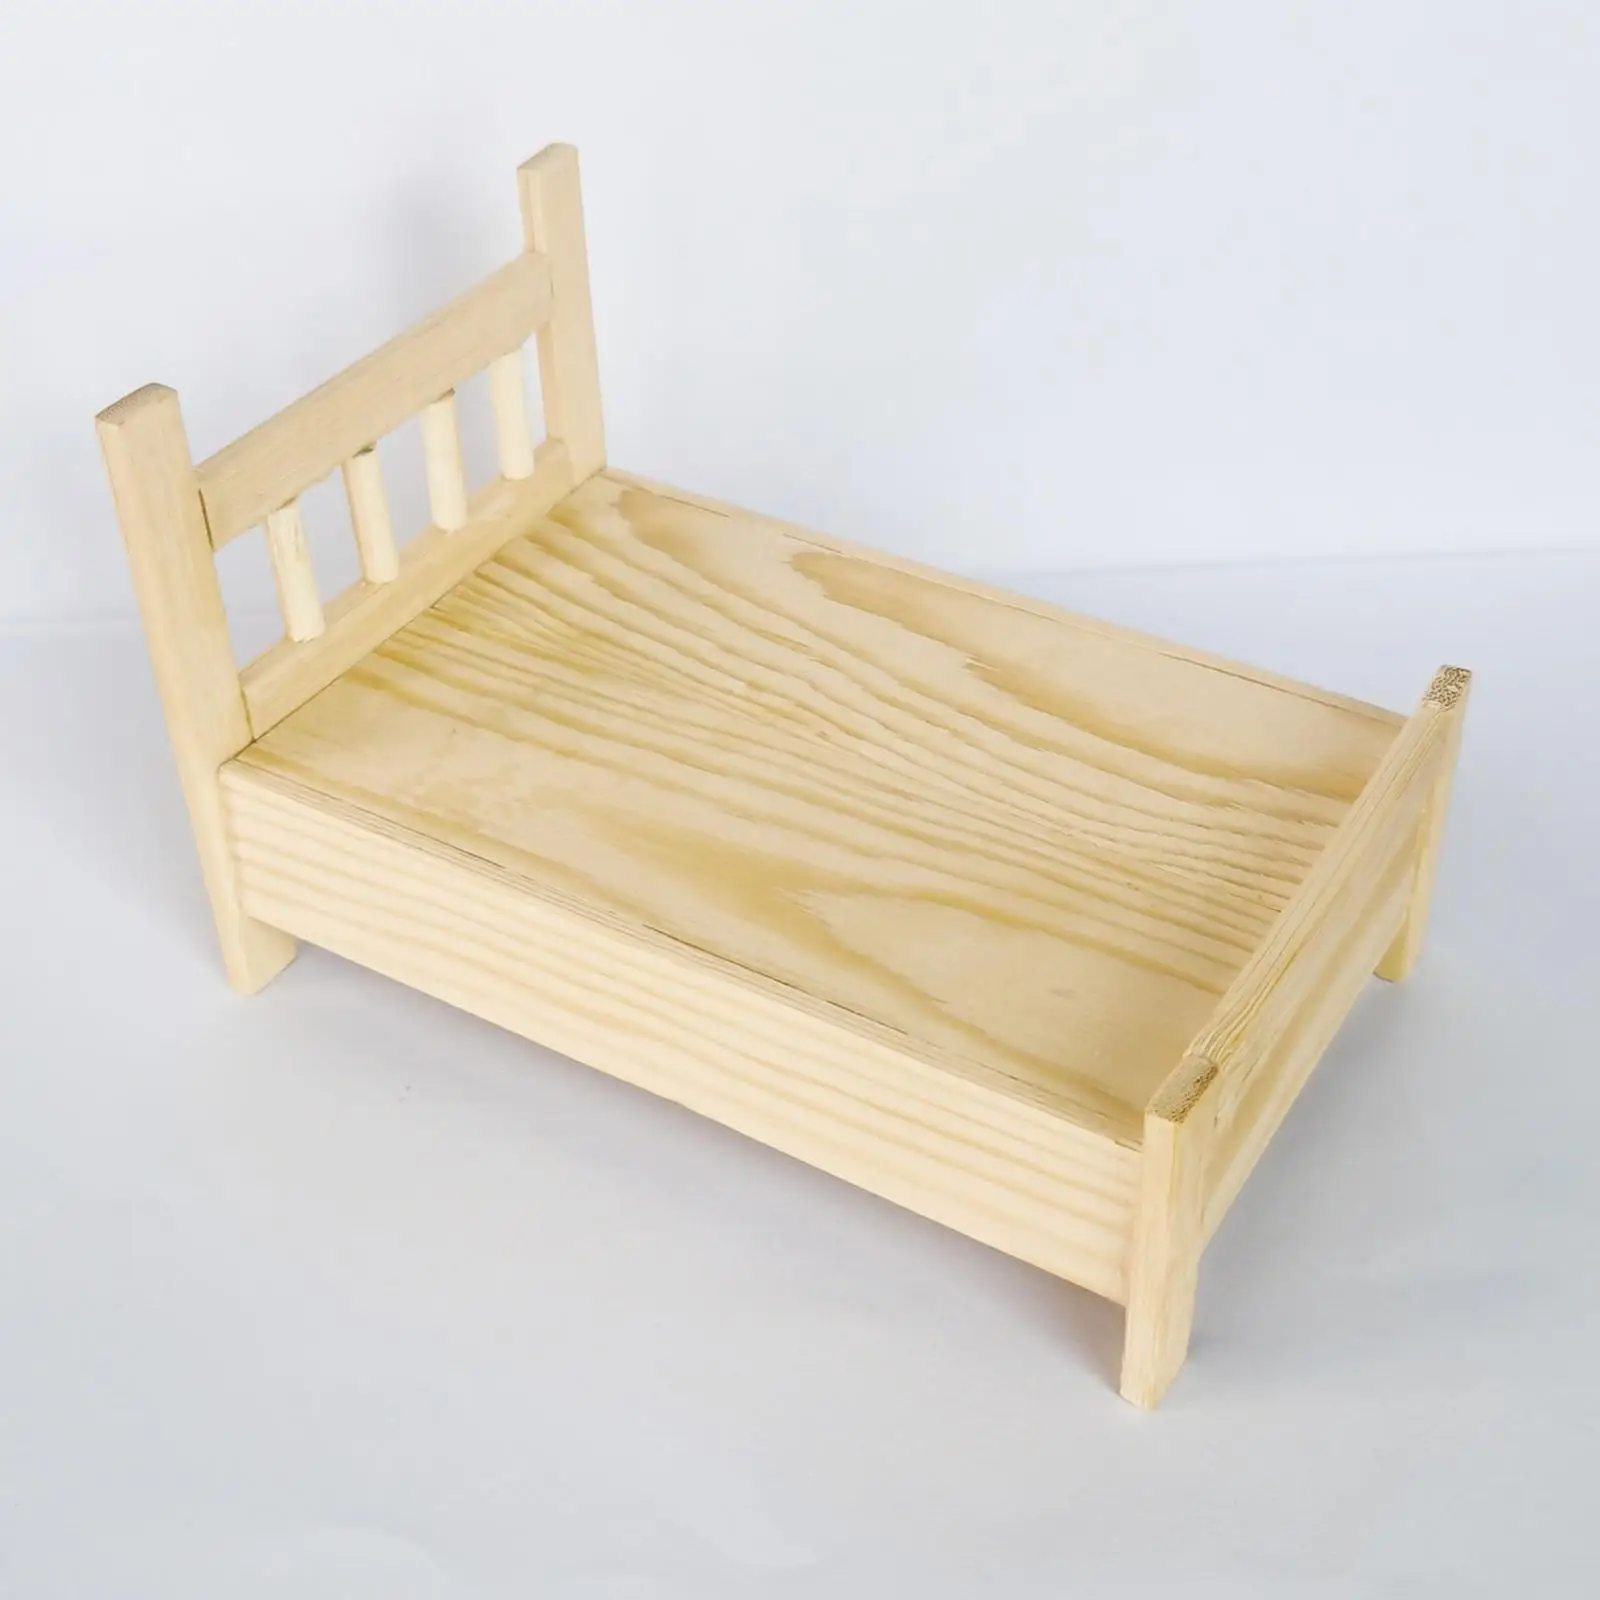 1/12 Scale Miniature Bed, Wooden Furniture Micro Landscape, Doll Accessories Decoration